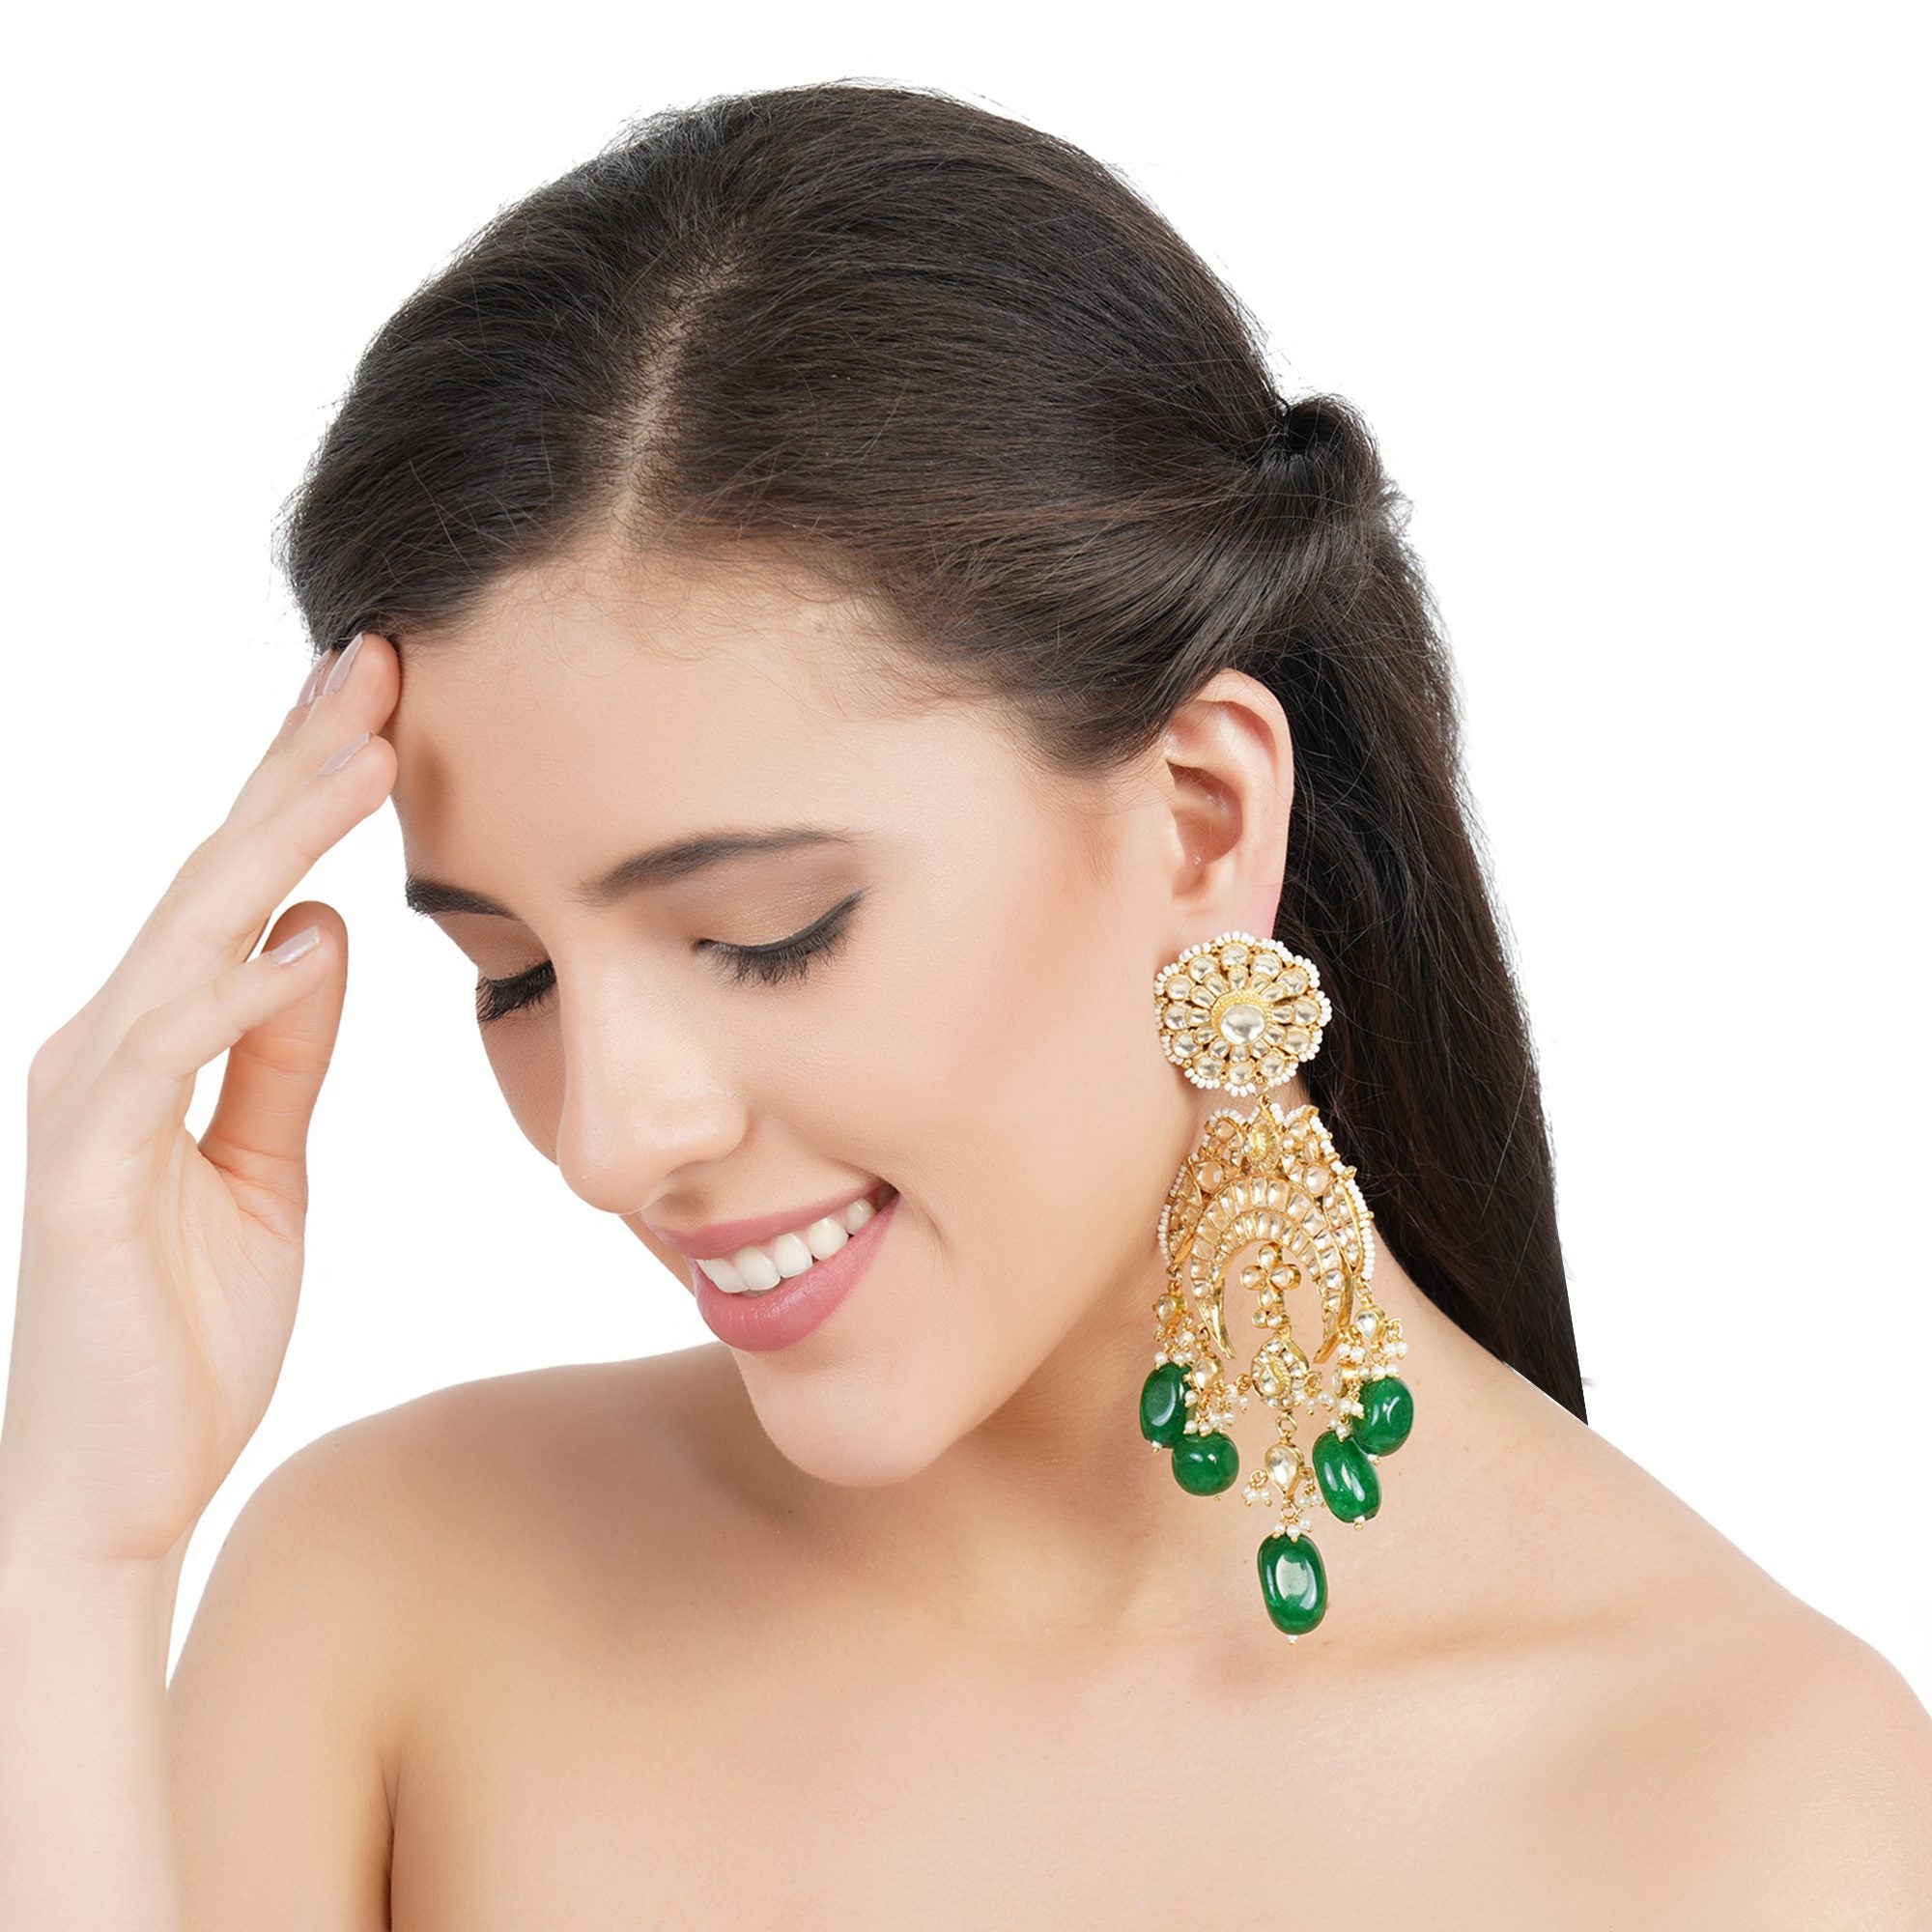 Aristocratic Chandra Earrings